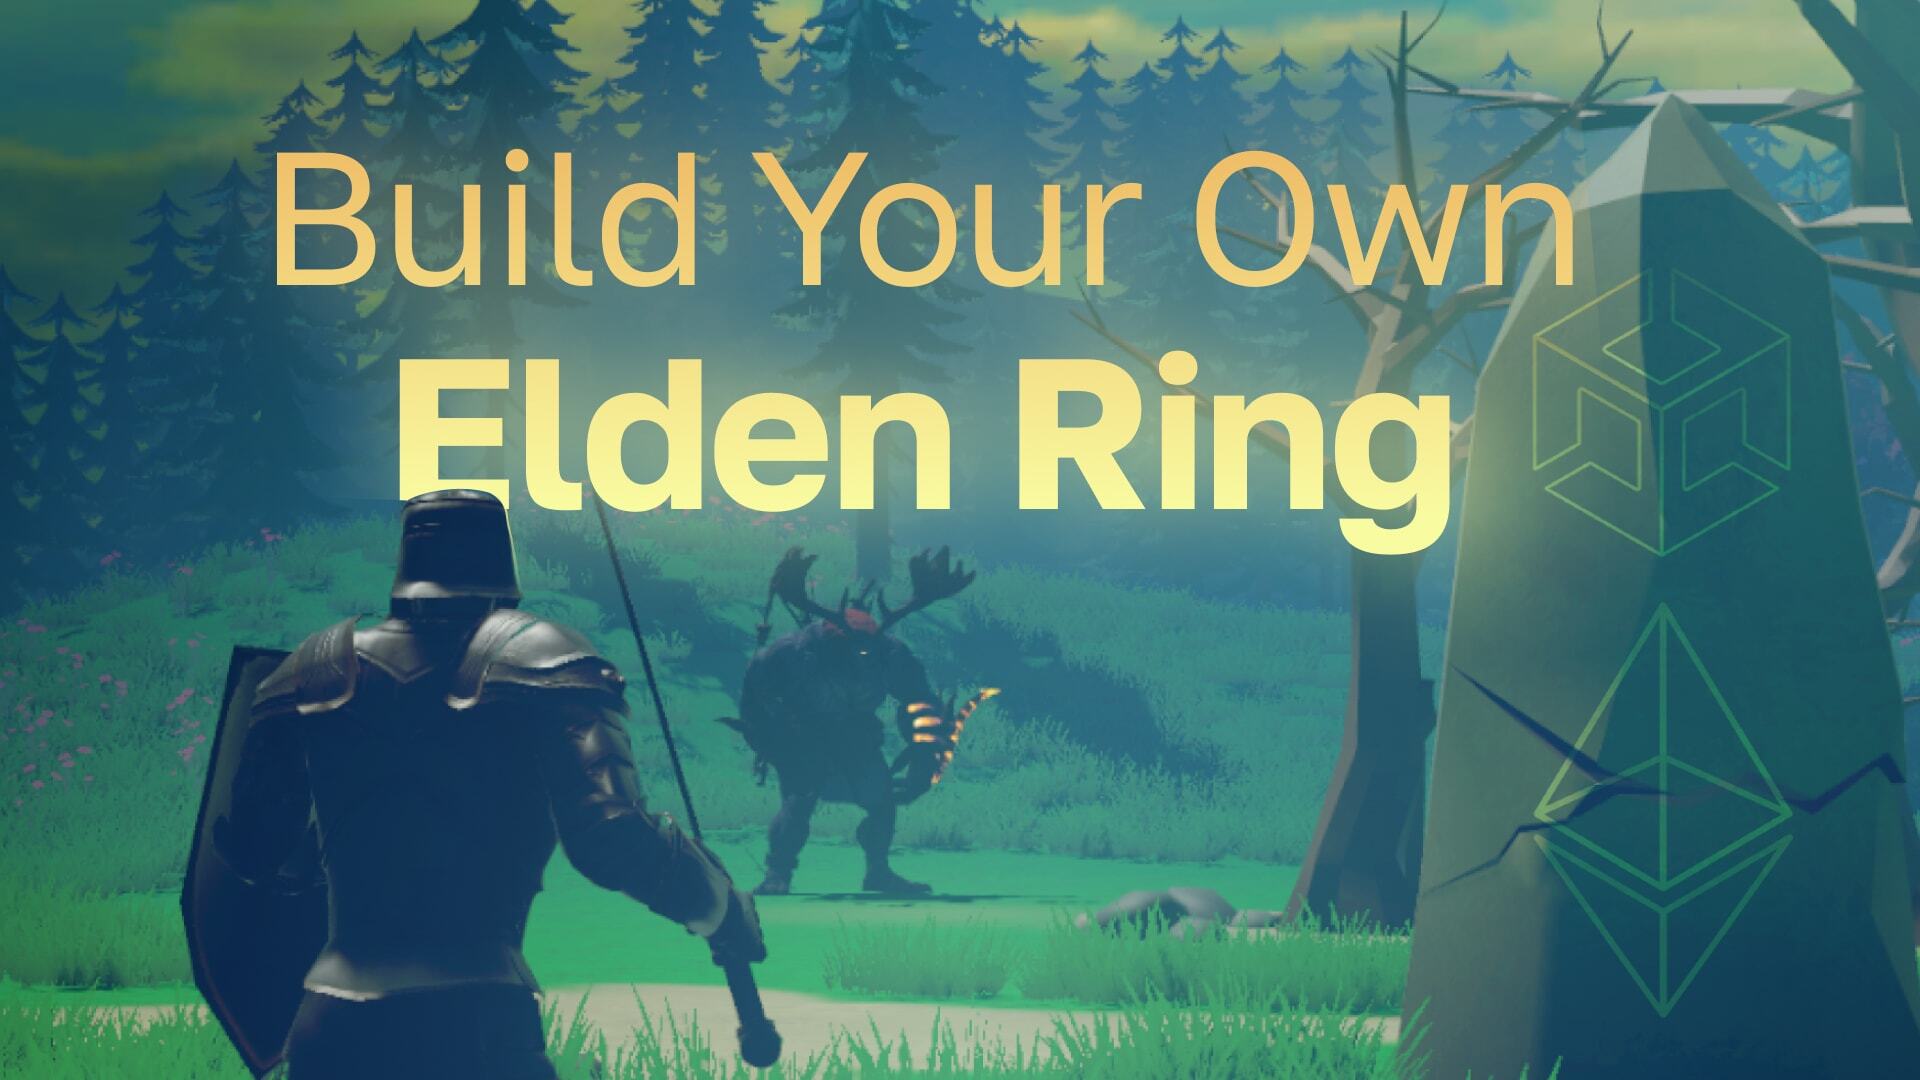 Web3 Elden Ring boss battle using Moralis and Unity